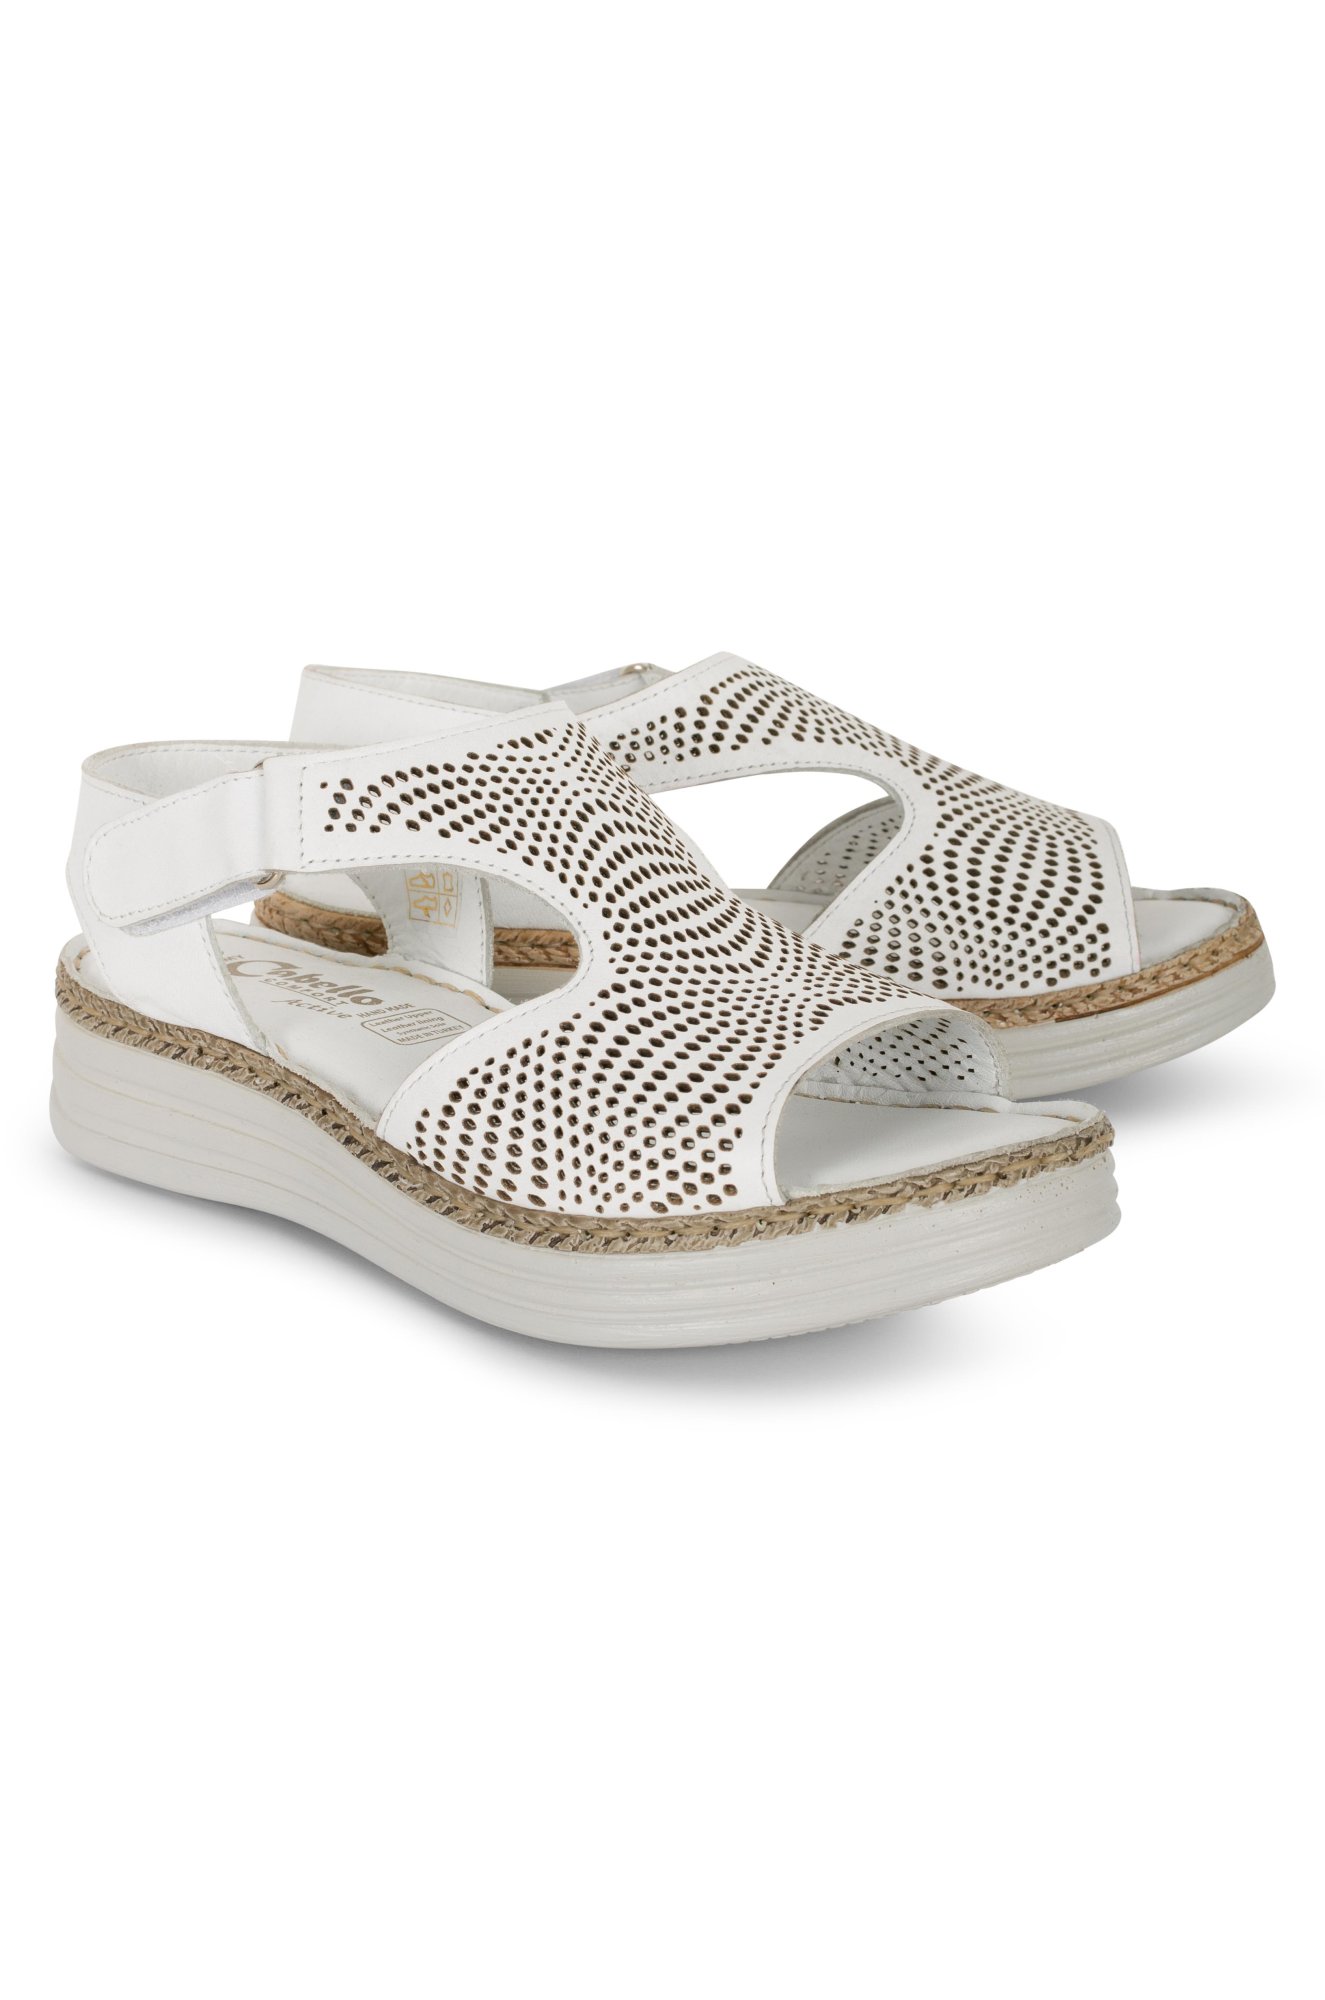 Made in Turkey Leather Sandal | WHITE | REMY YY – Ballentynes Fashion ...